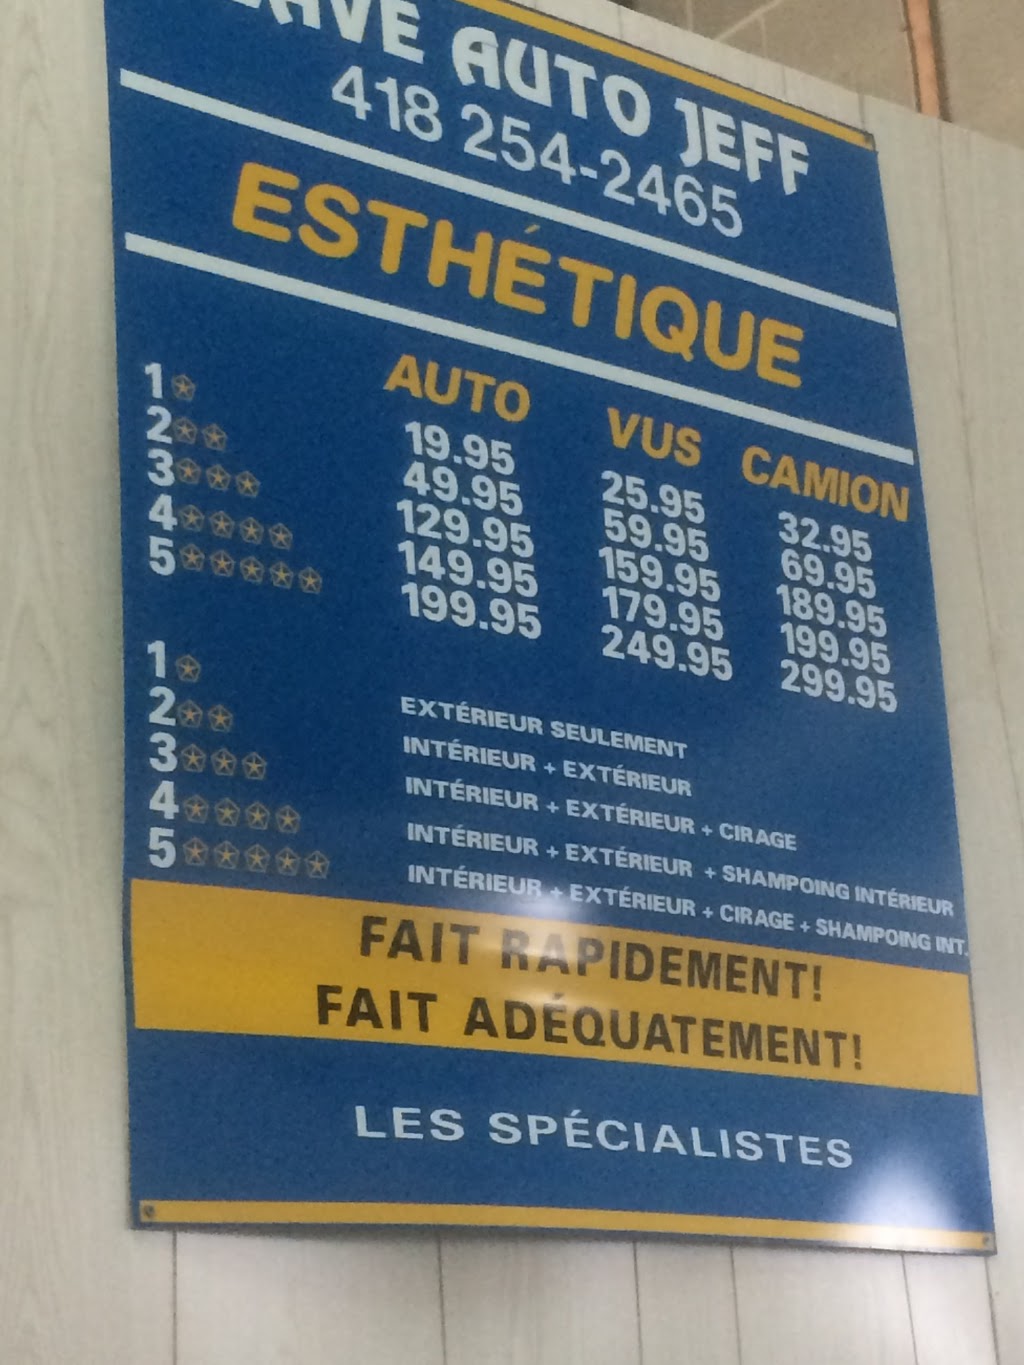 Lave-Auto Jeff | car repair | 530 Rue Maurice-Bois, Québec, QC G1M 3G3, Canada | 4182542465 OR +1 418-254-2465